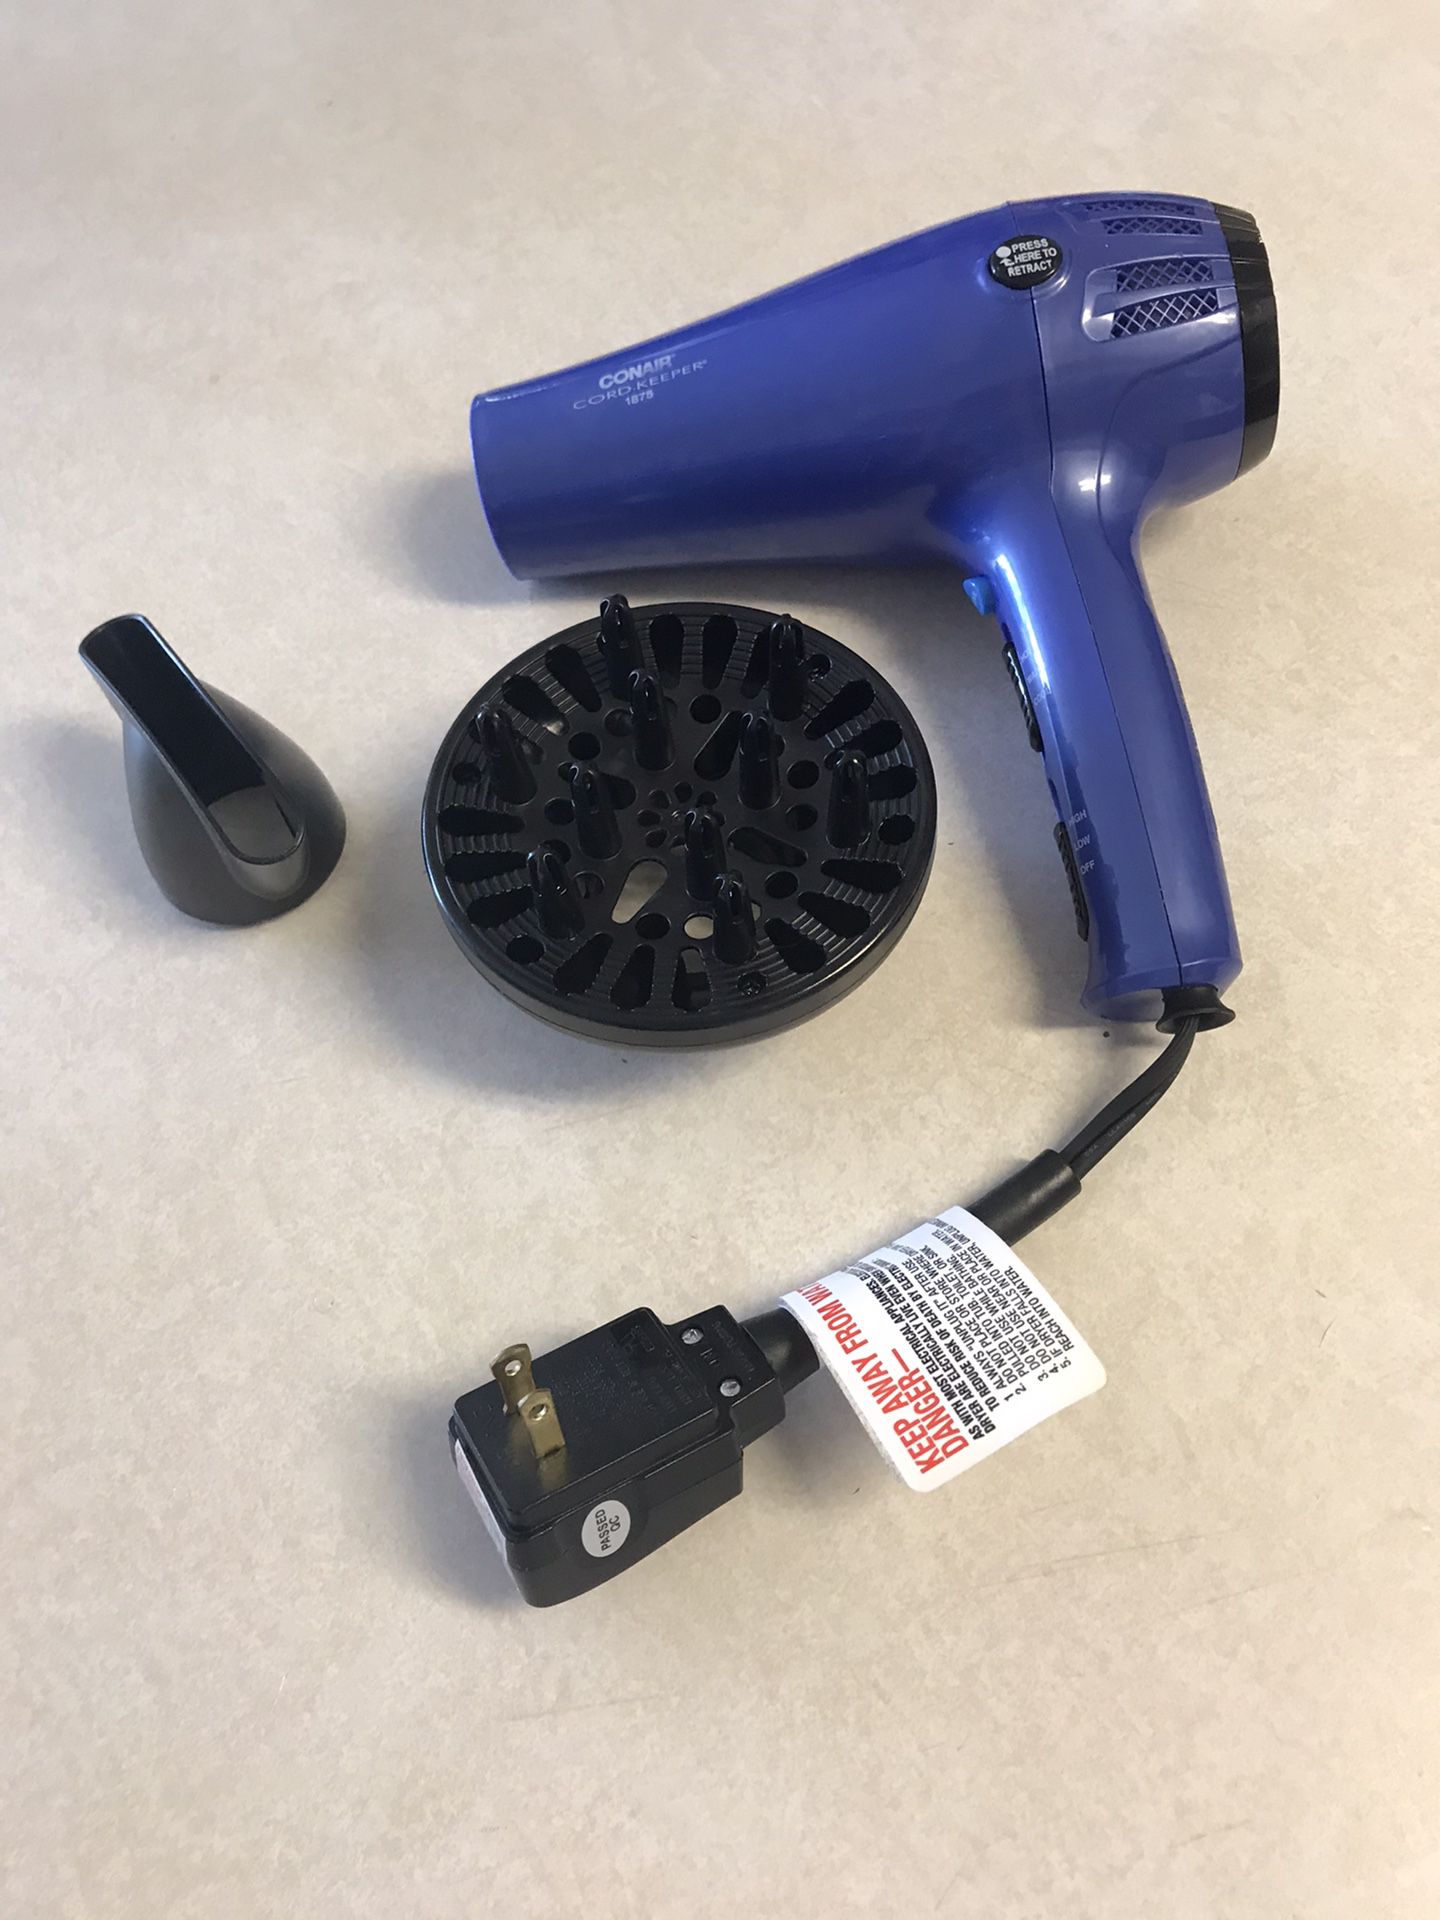 ConAit CordKeeper Blow Dryer + Attachments